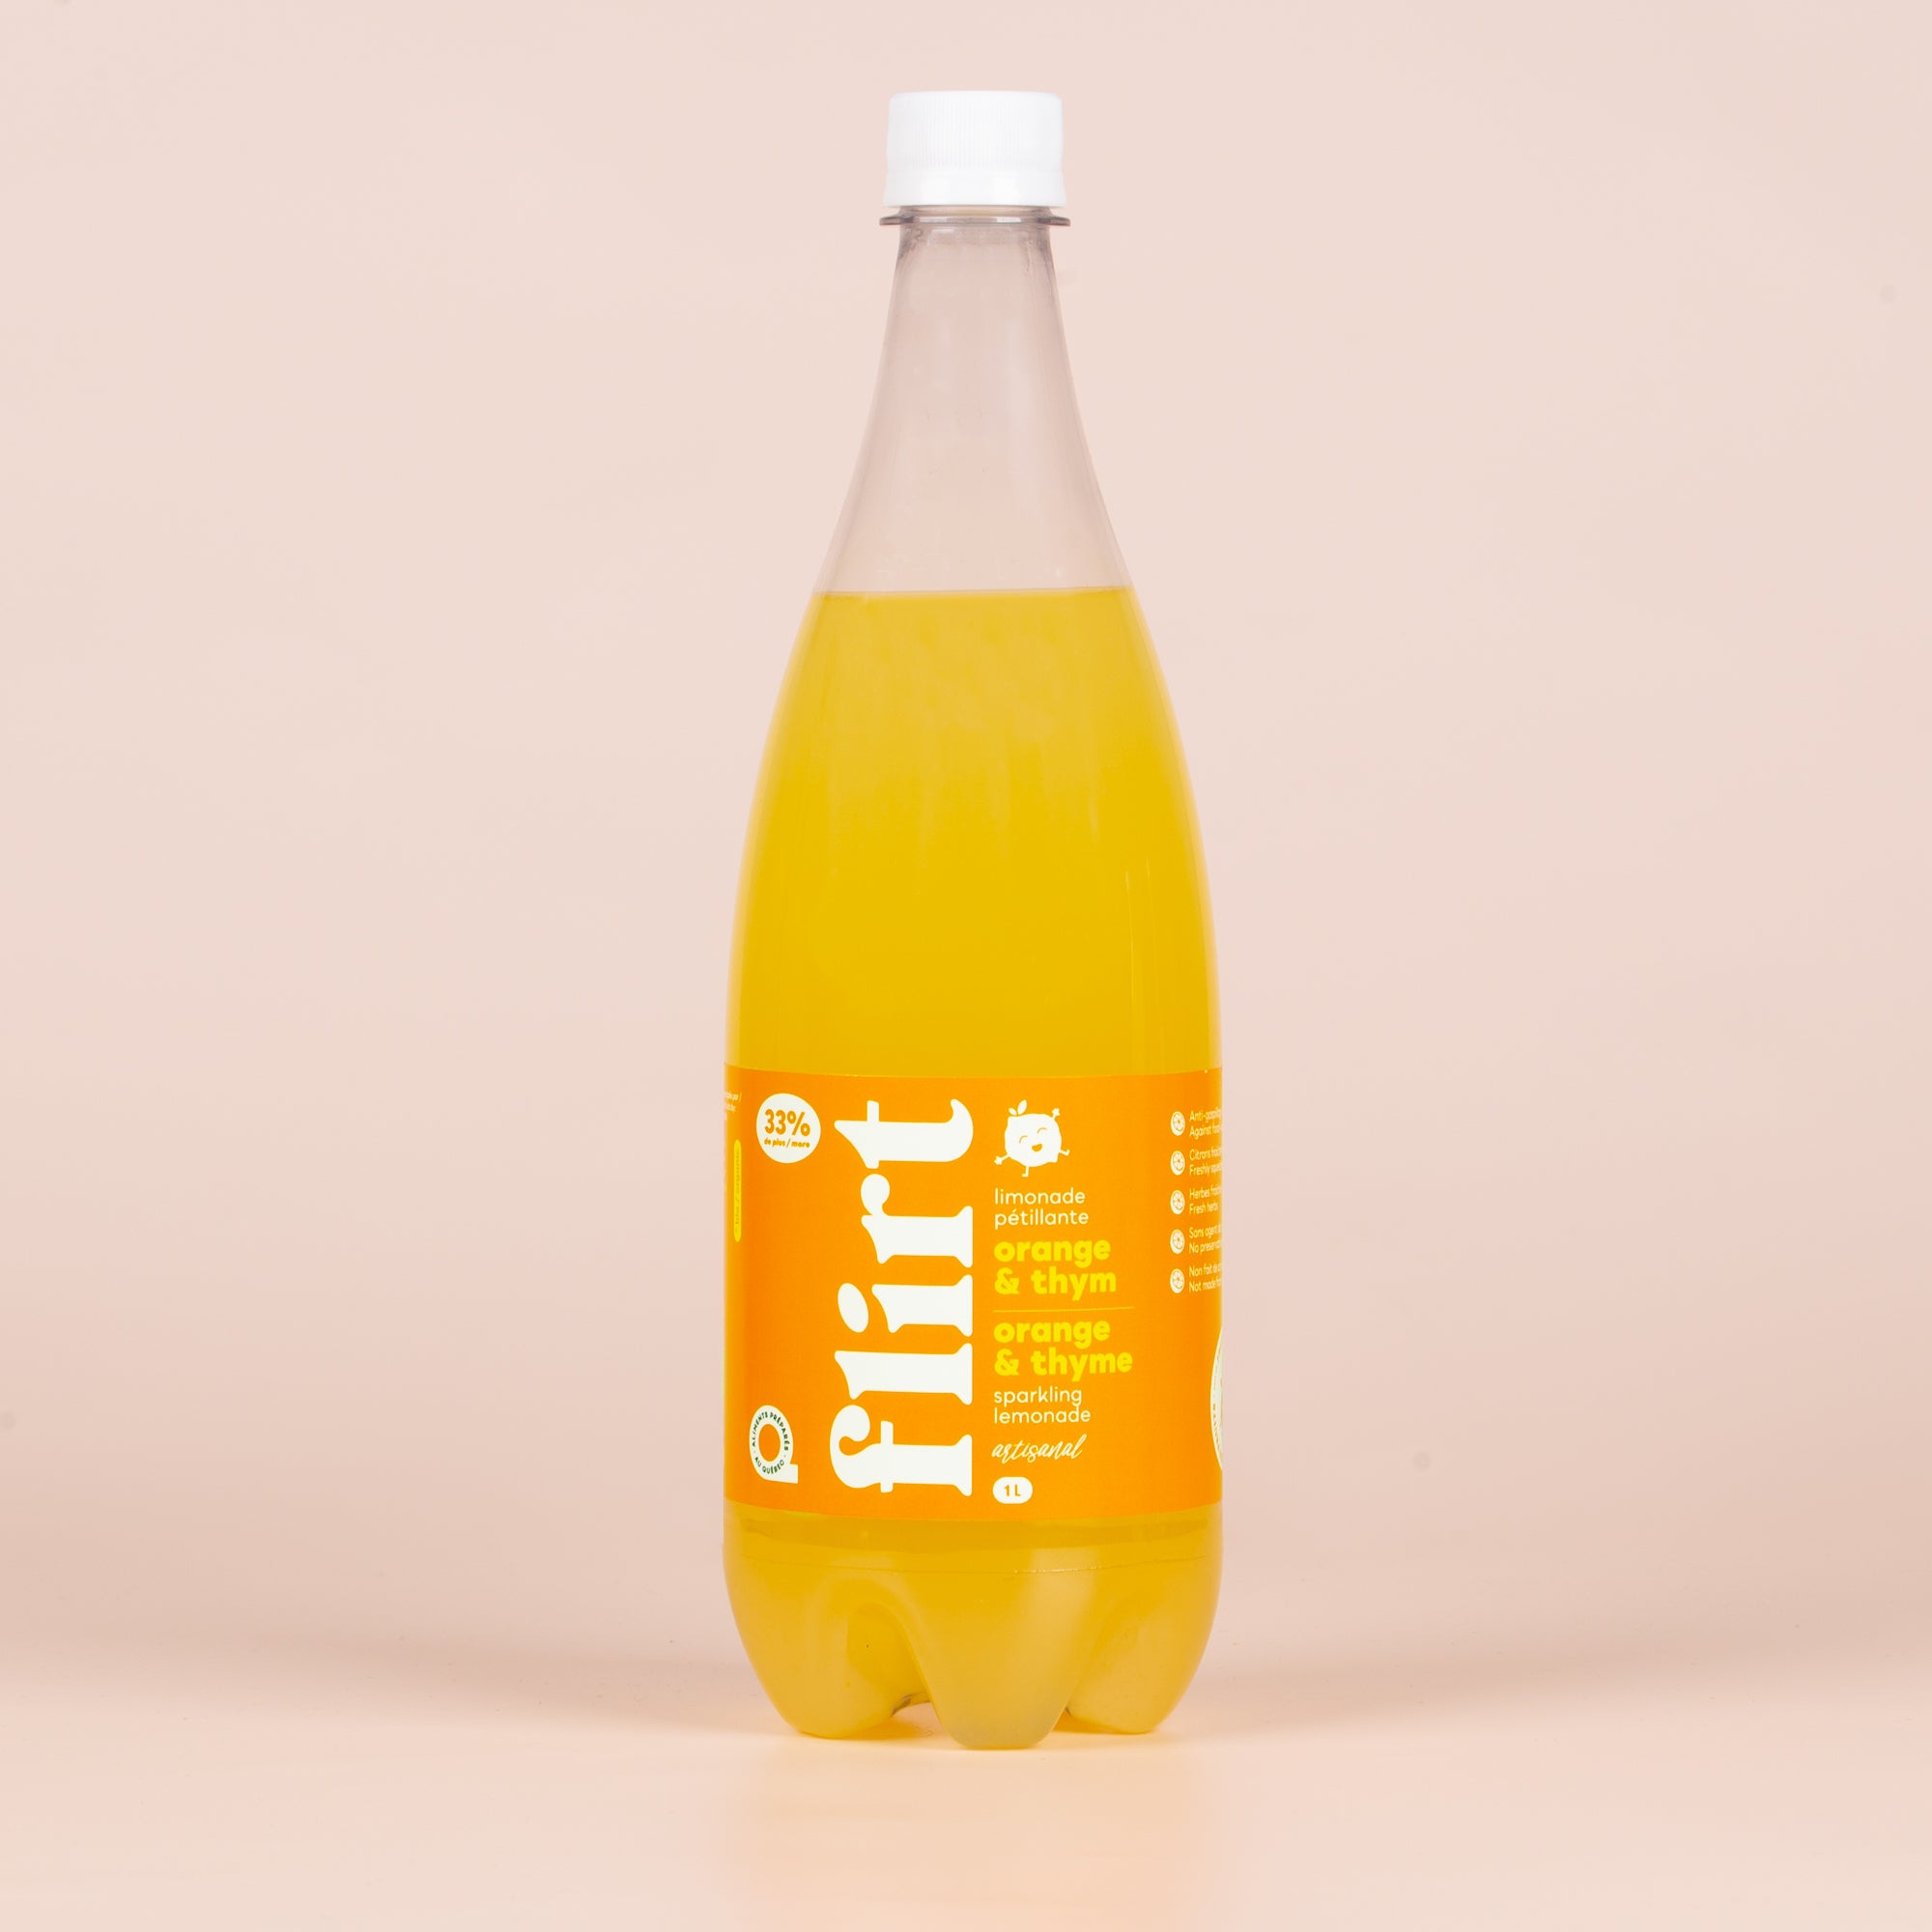 boisson gazeuse orange thym flirt drinks format detaillant